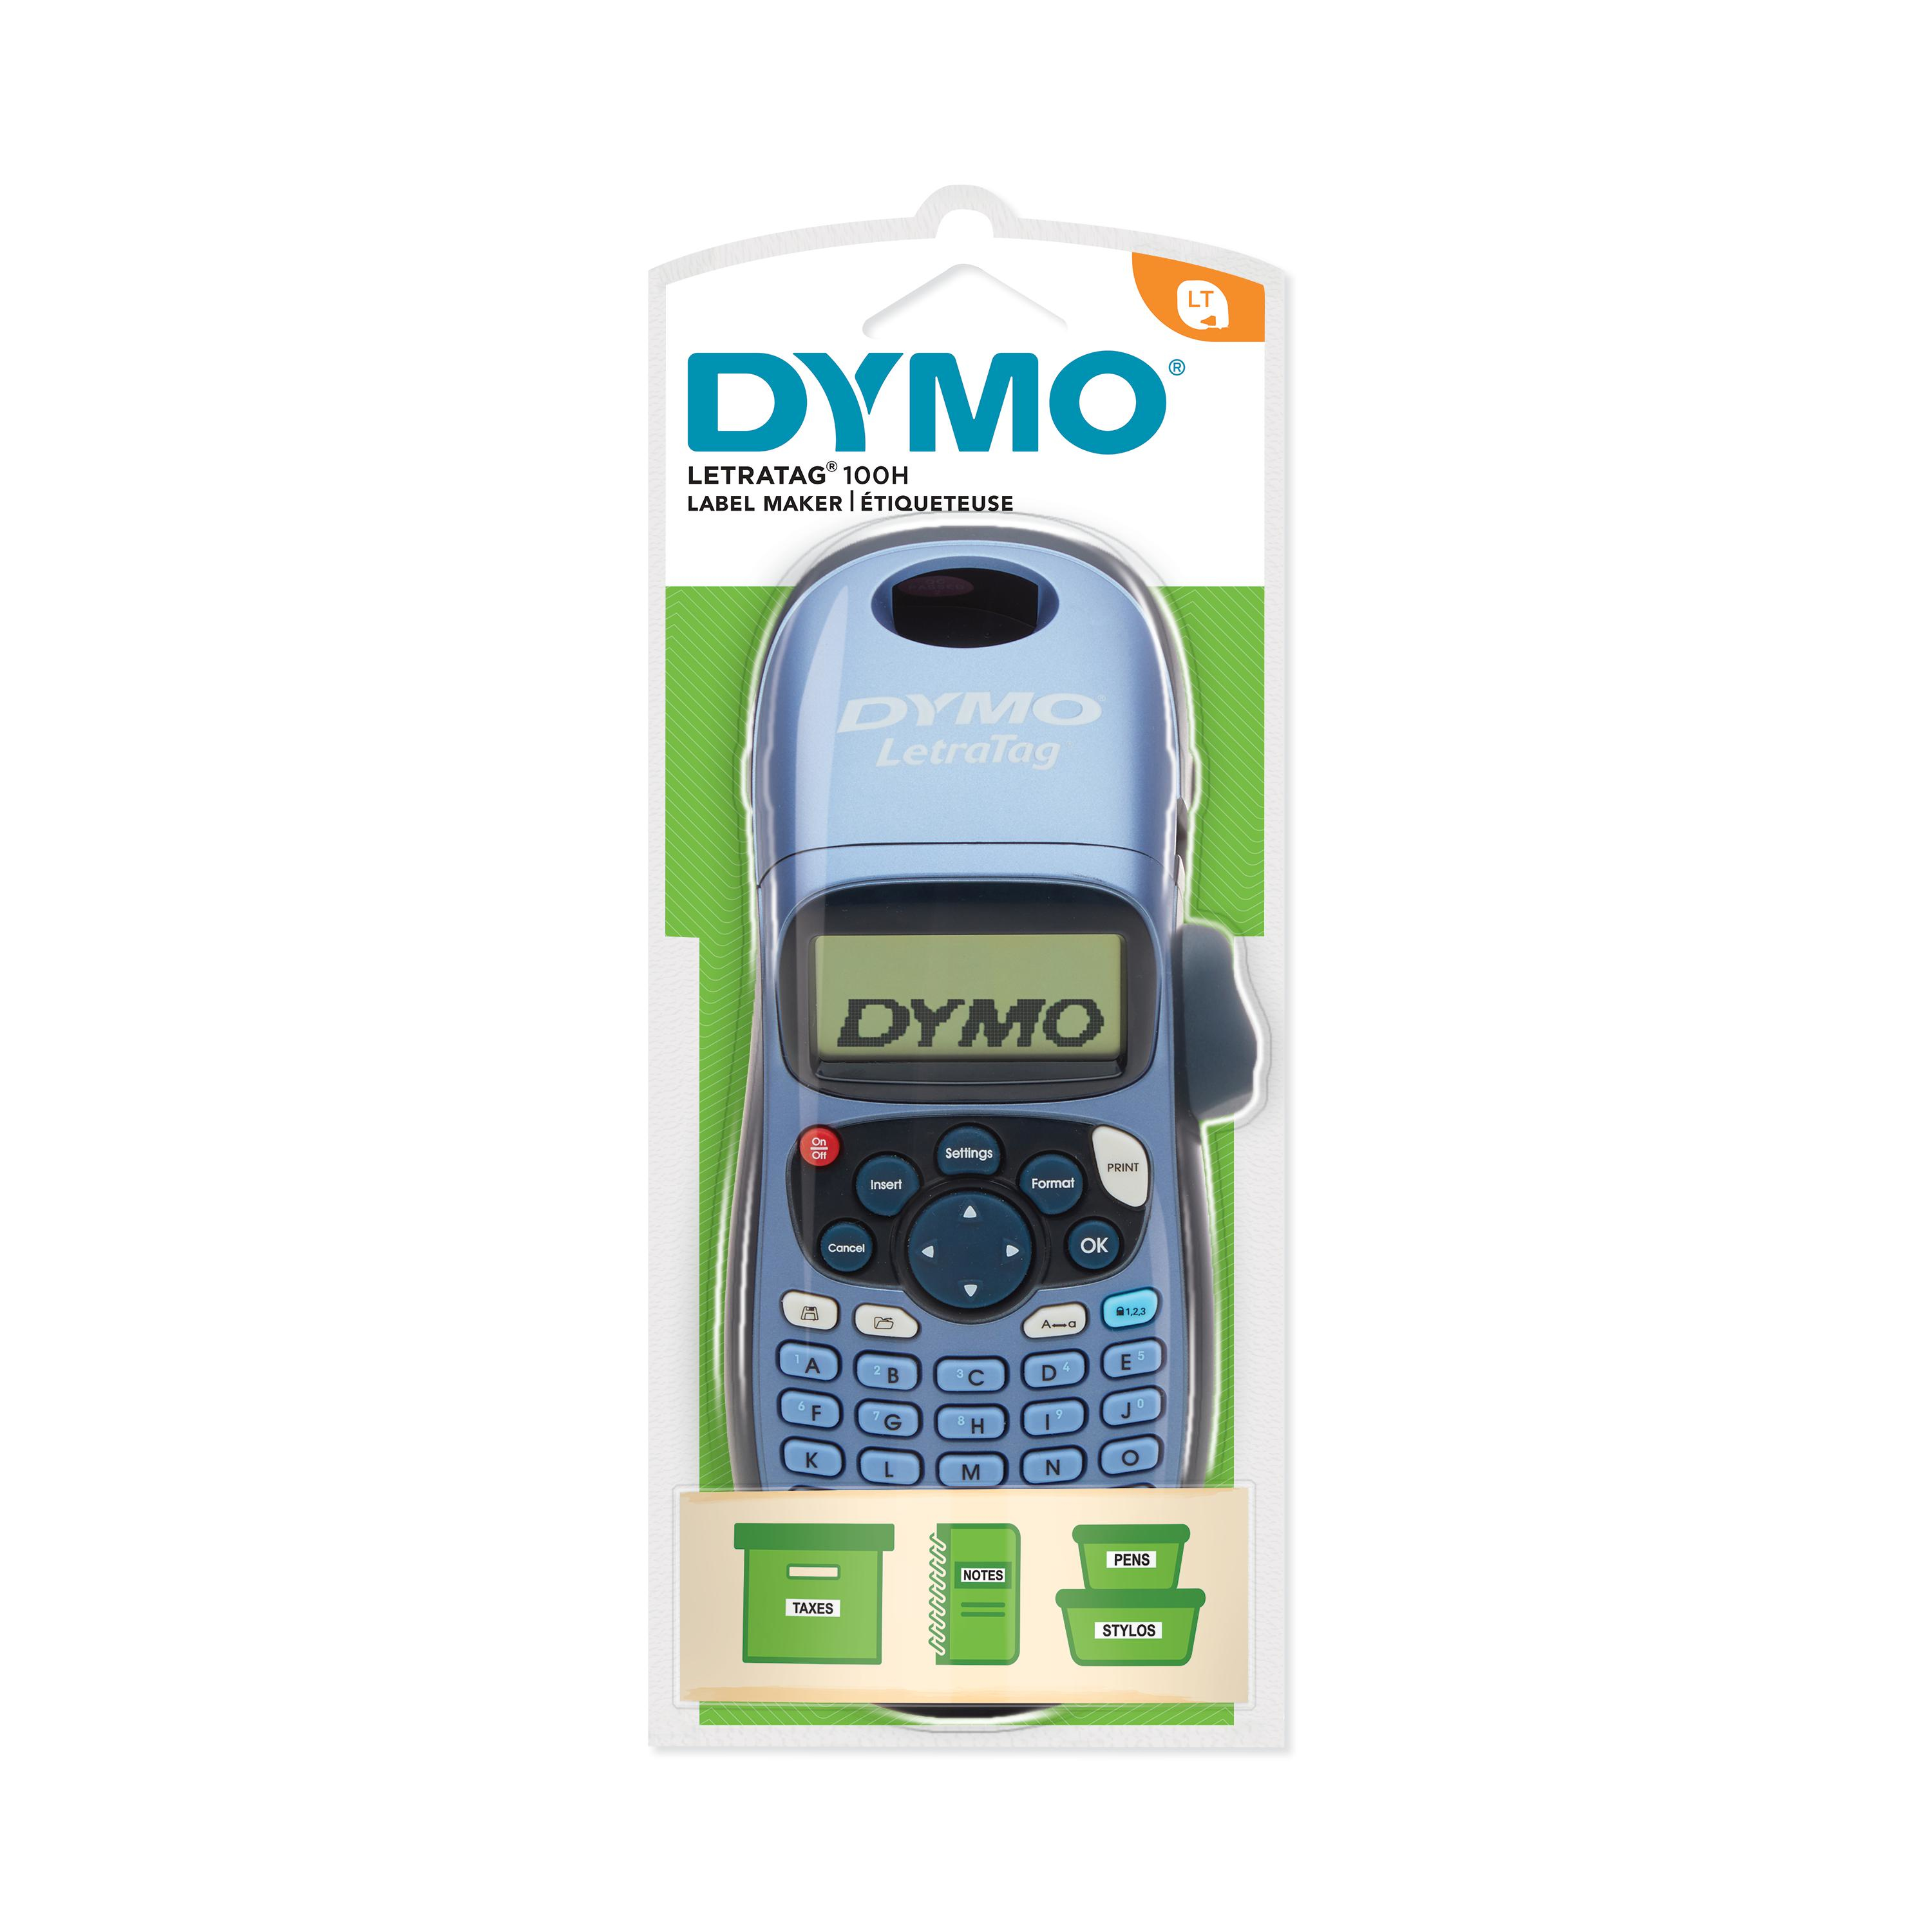 Dymo 2174576, Etikettendrucker, DYMO LetraTag LT-100H 2174576 (BILD1)